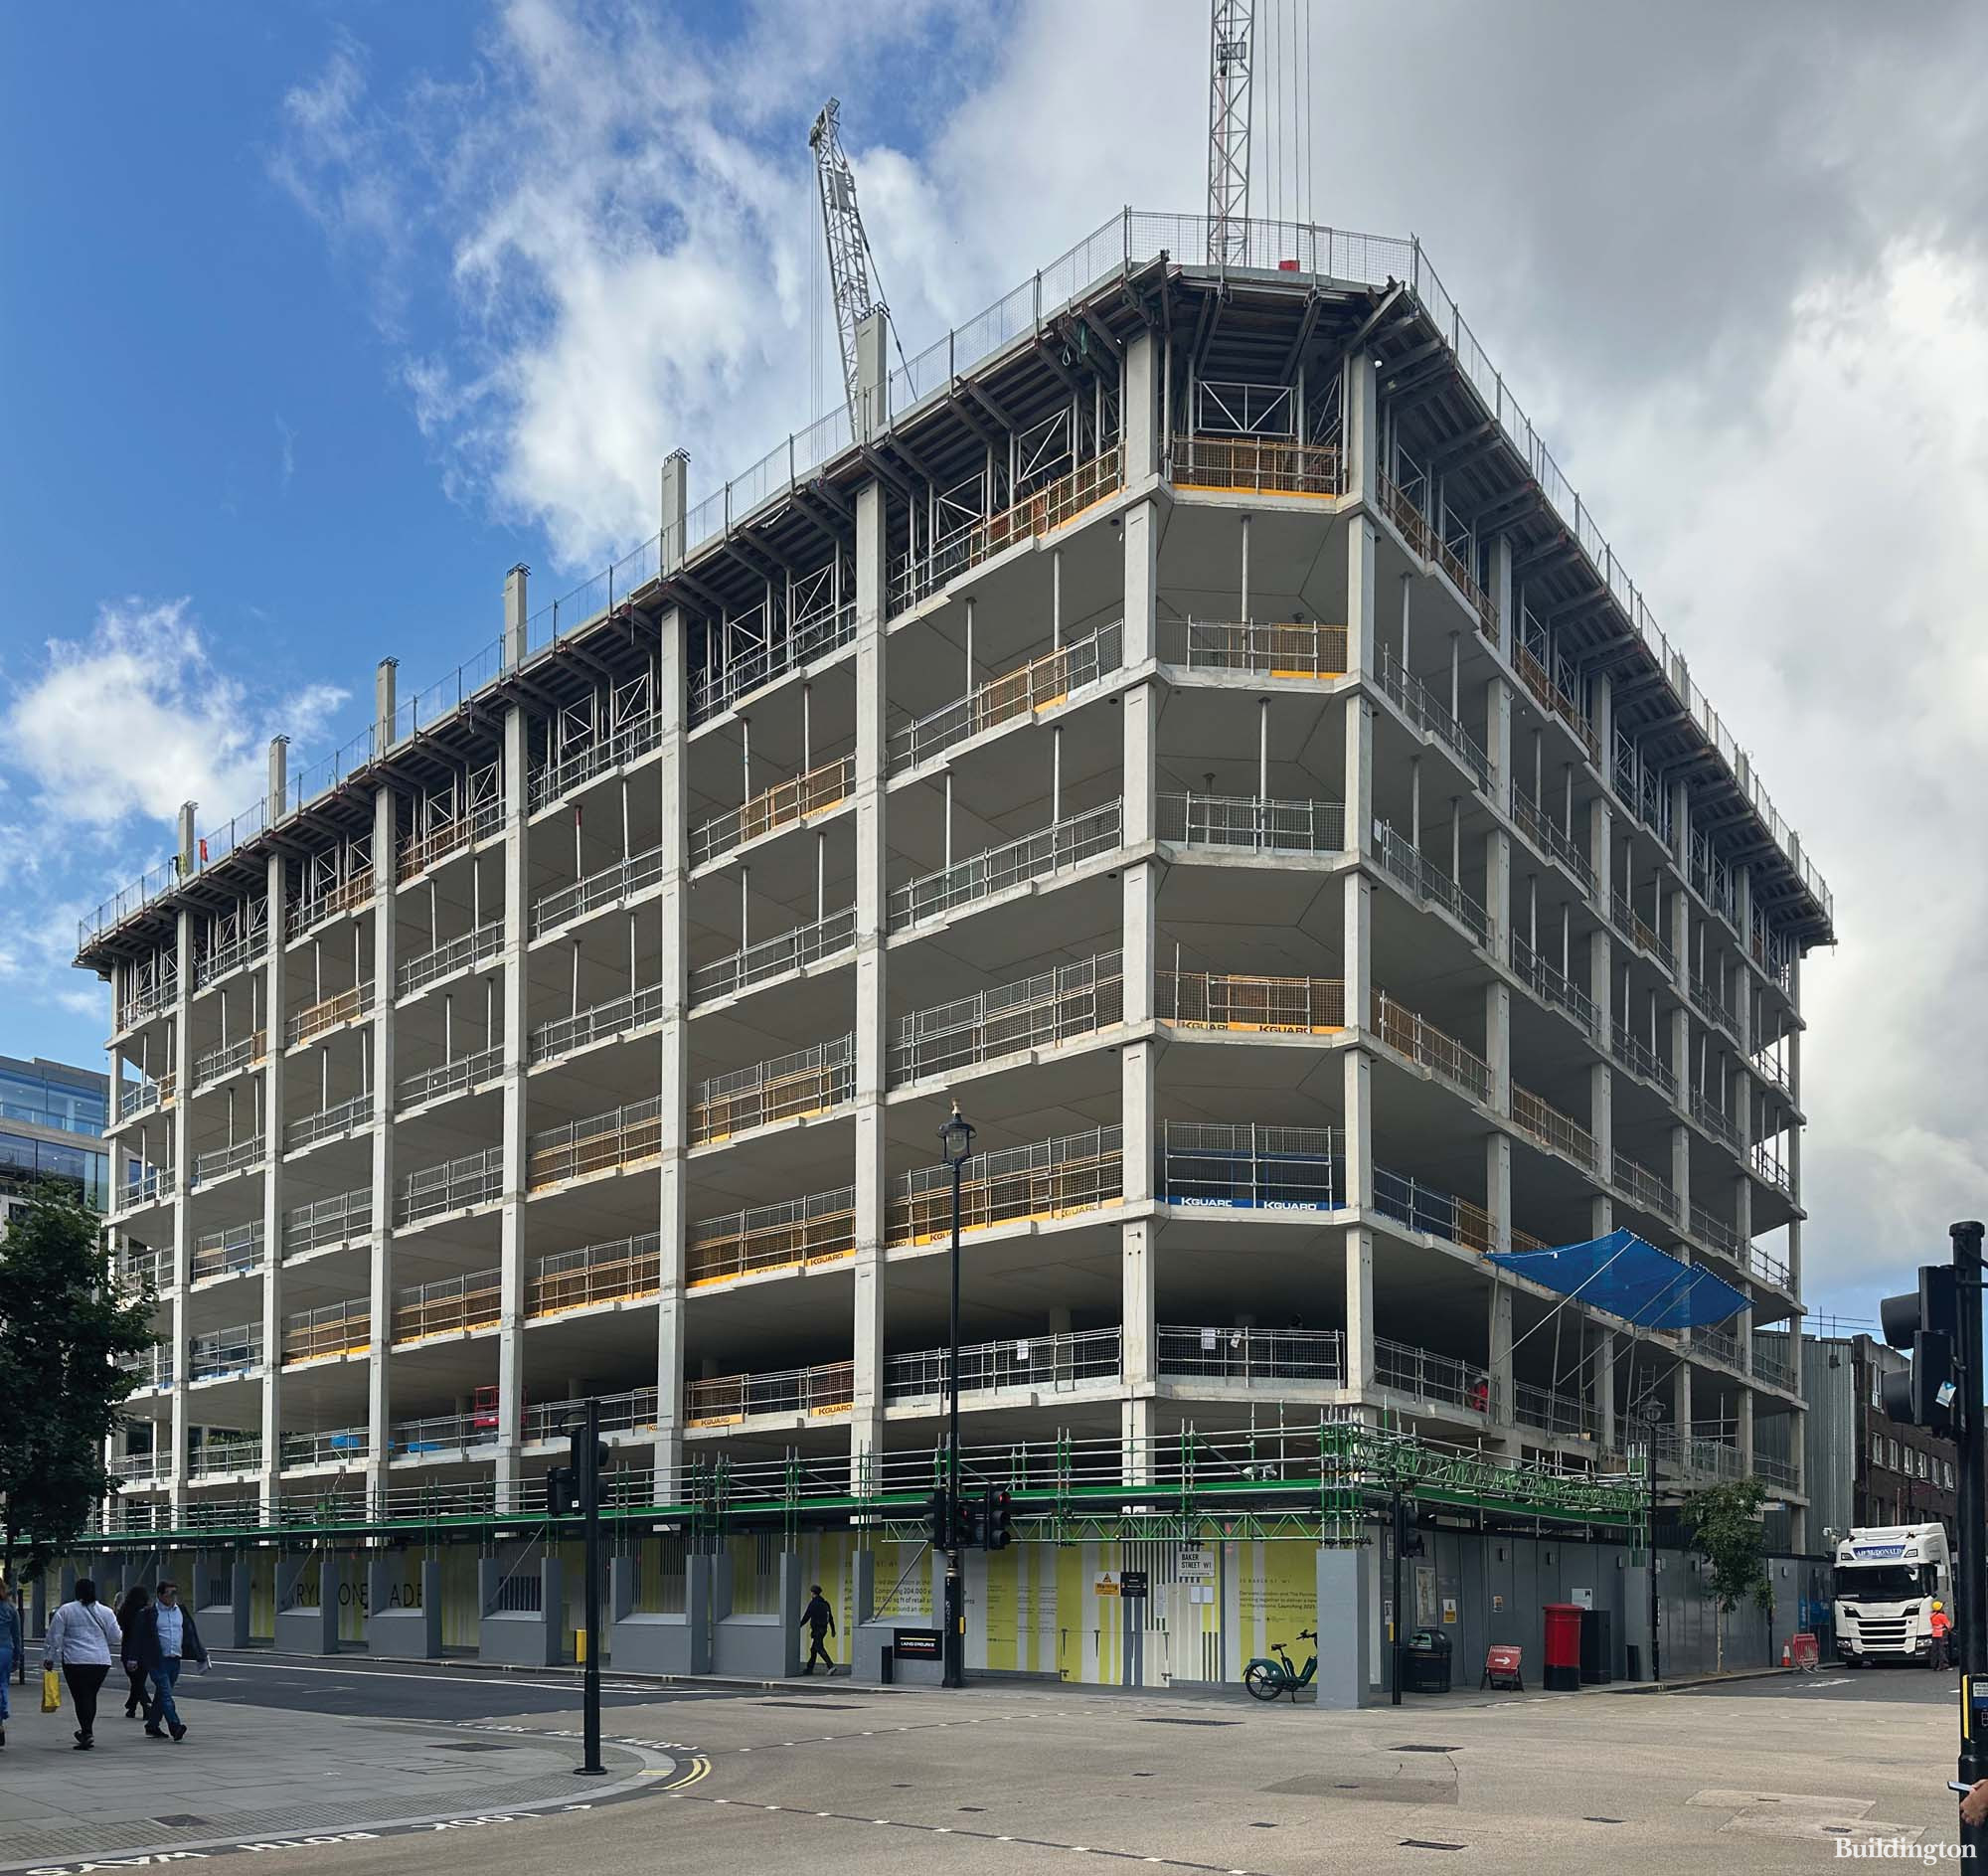 25 Baker Street office development under construction in Summer 2023.